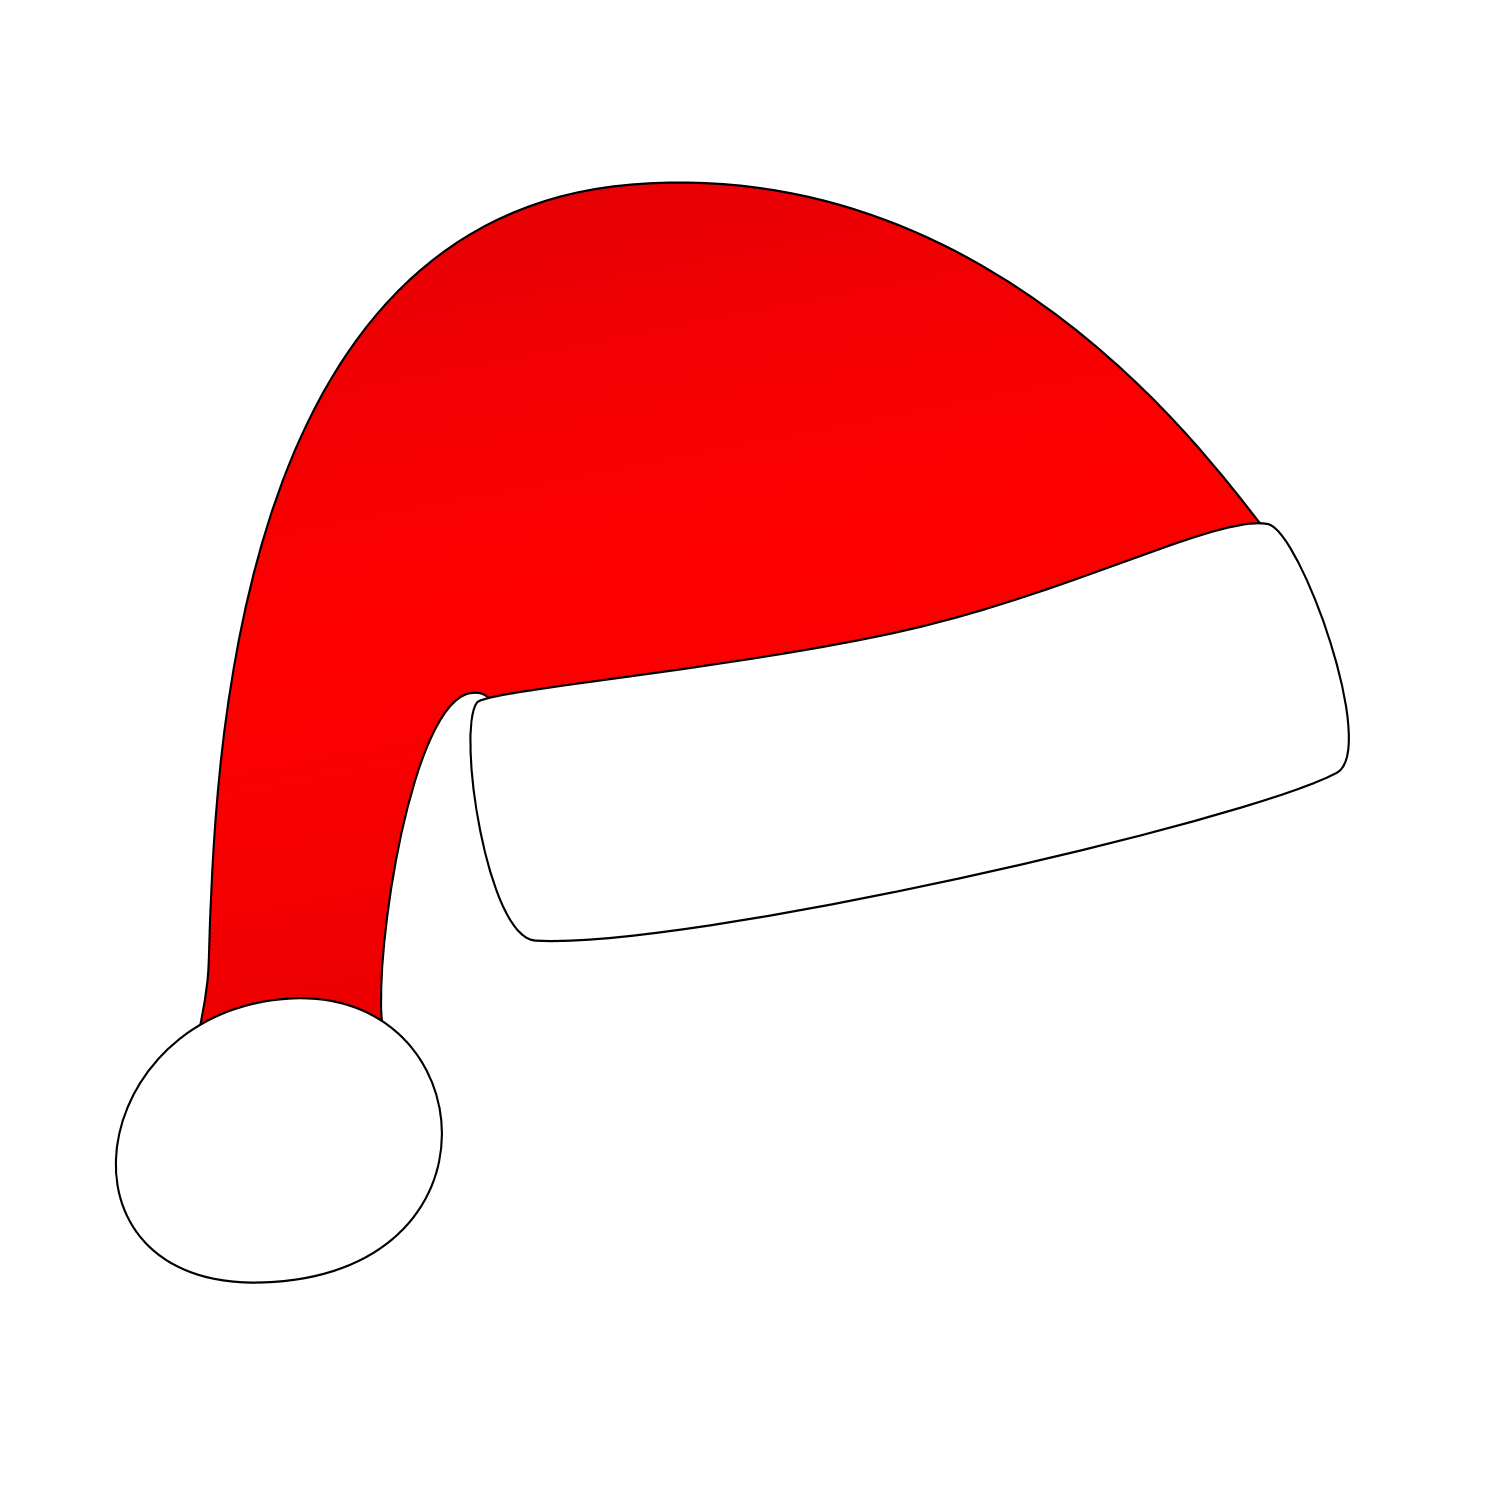 Santa Claus Hat PNG Image